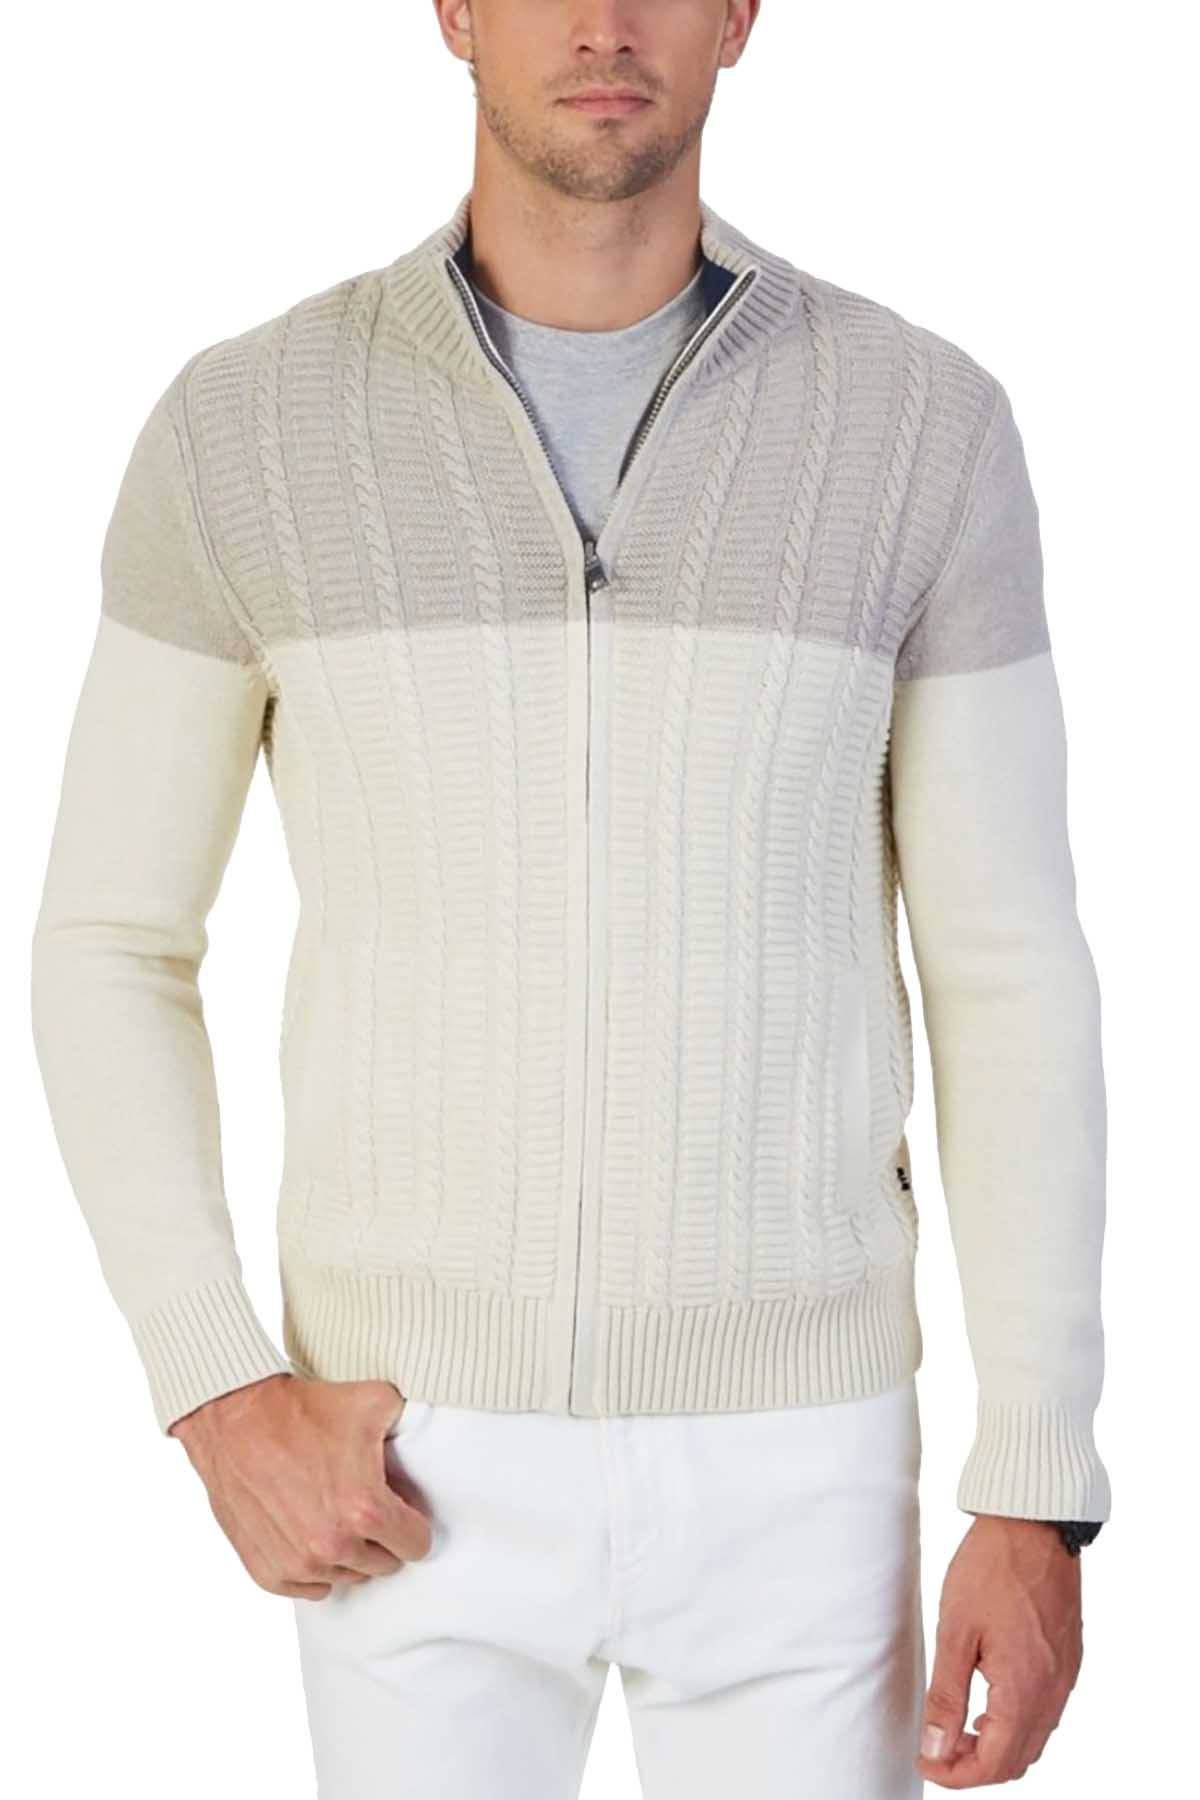 Nautica Bone-White Cable-Knit Two-Tone Full-Zip Sweater